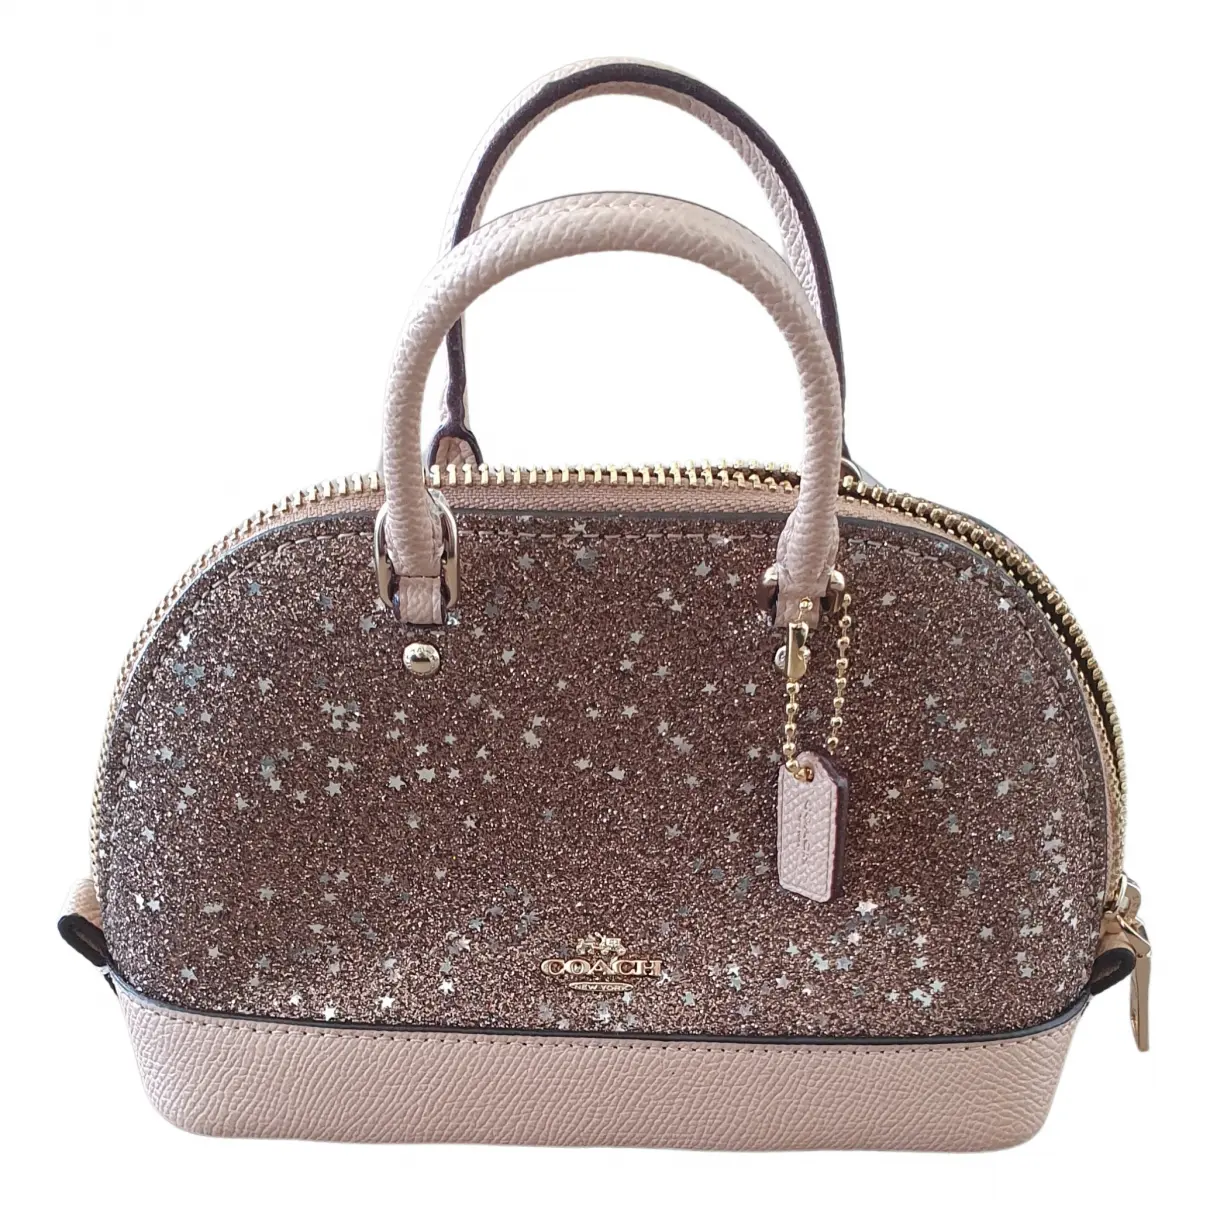 Cartable mini sierra leather handbag Coach